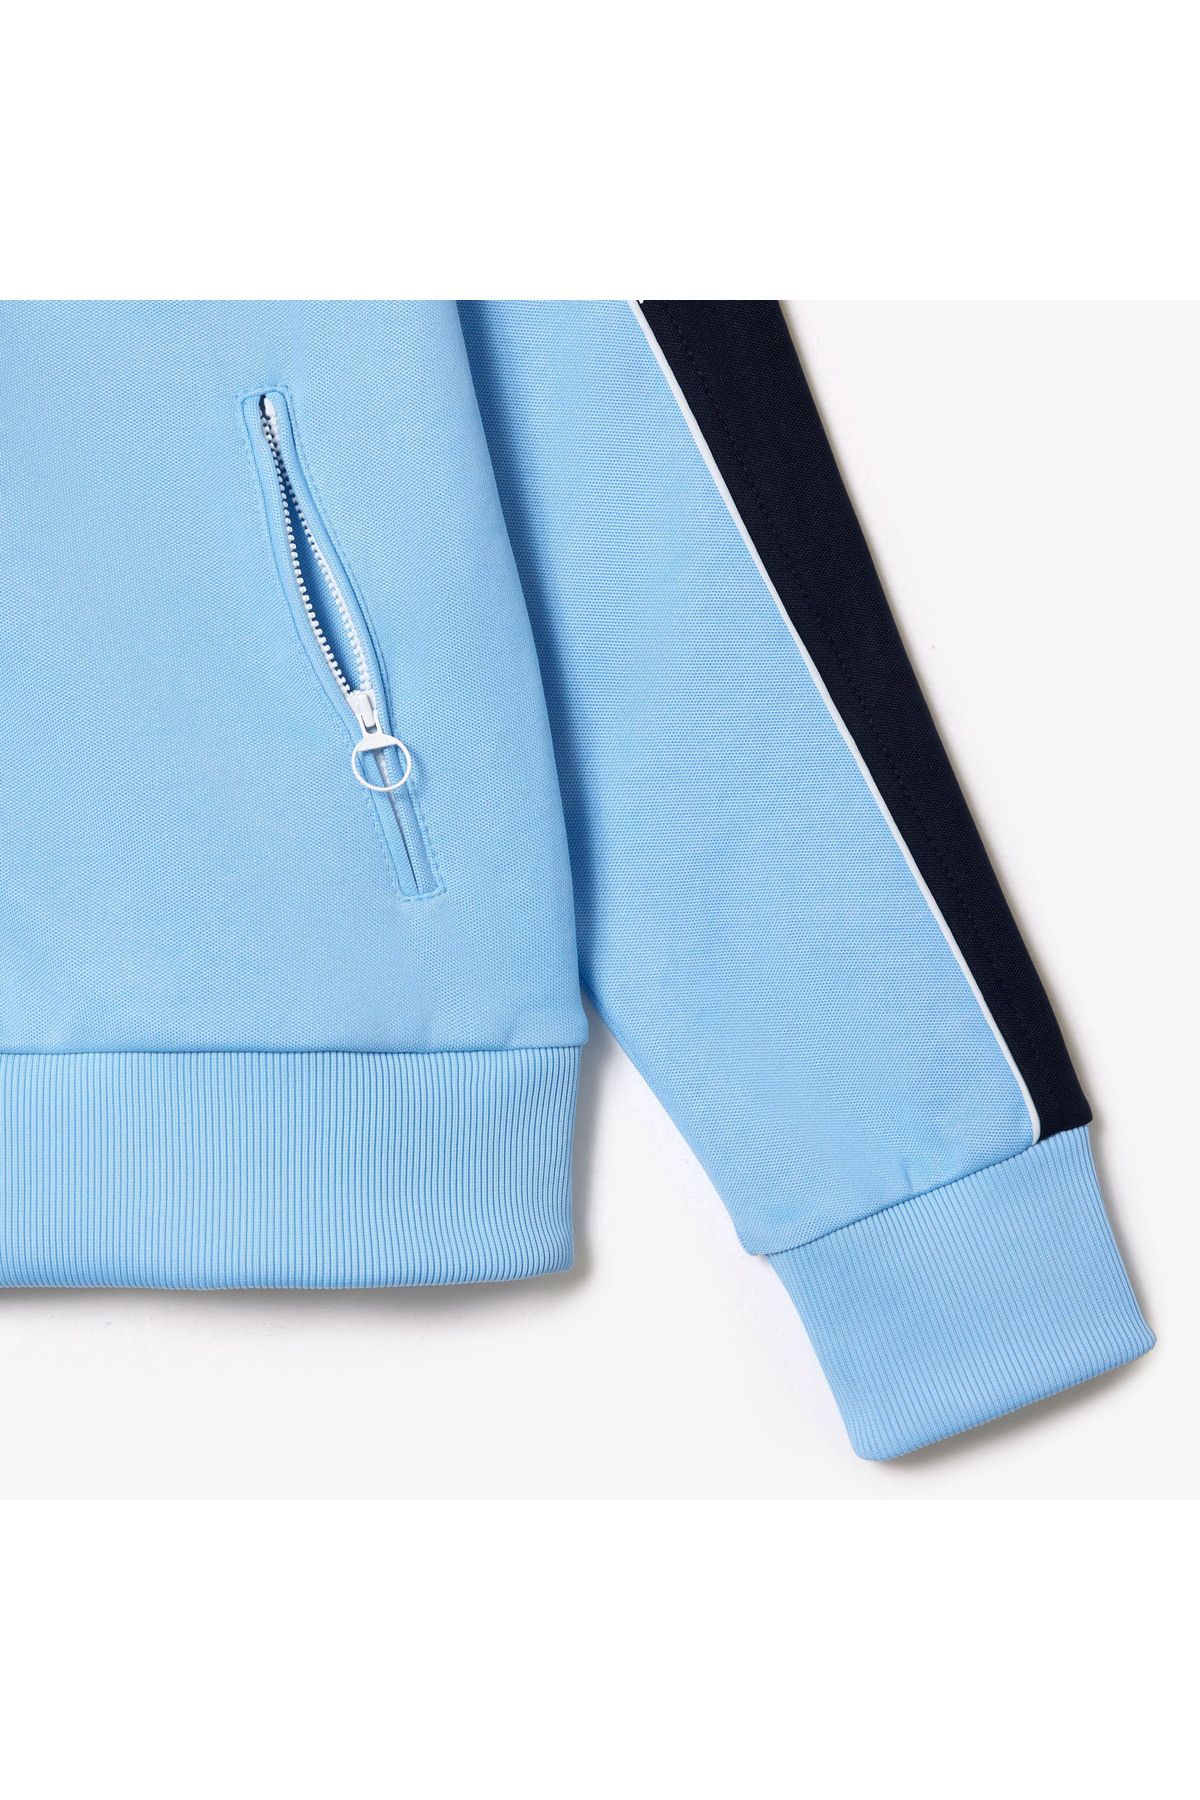 Lacoste پیراهن آبی بلوک رنگ به طور منظم و مناسب زنان